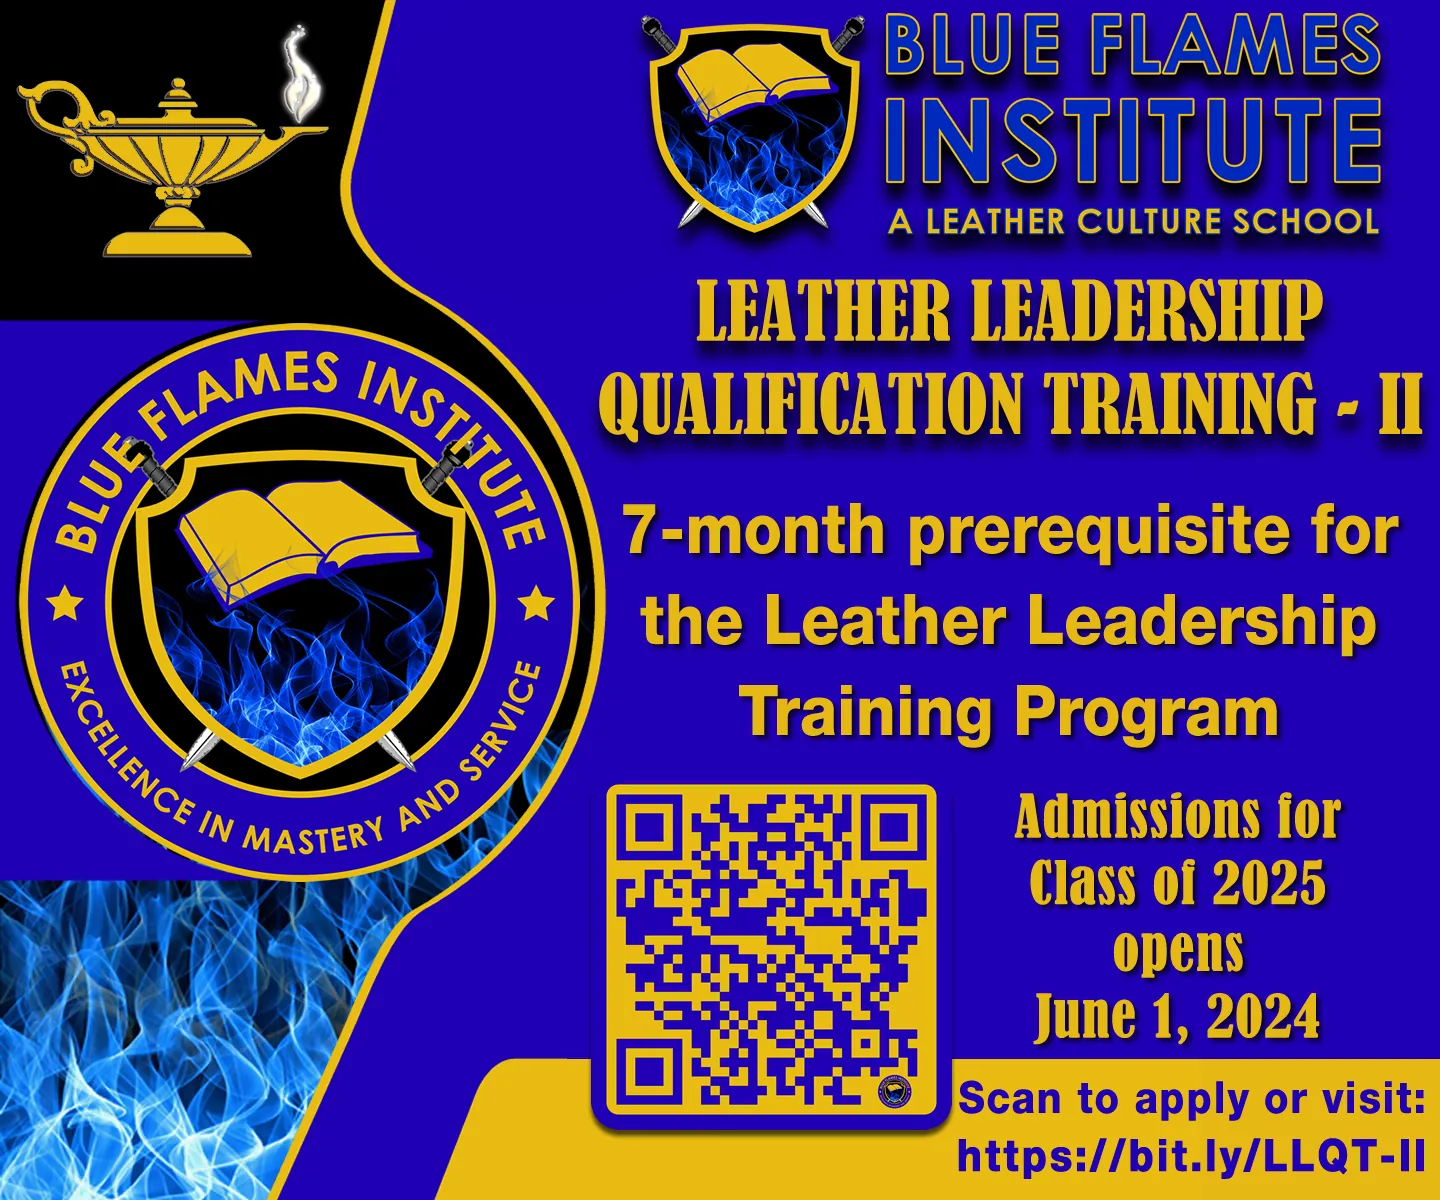 BFI's Leather Leadership Qualification Training II